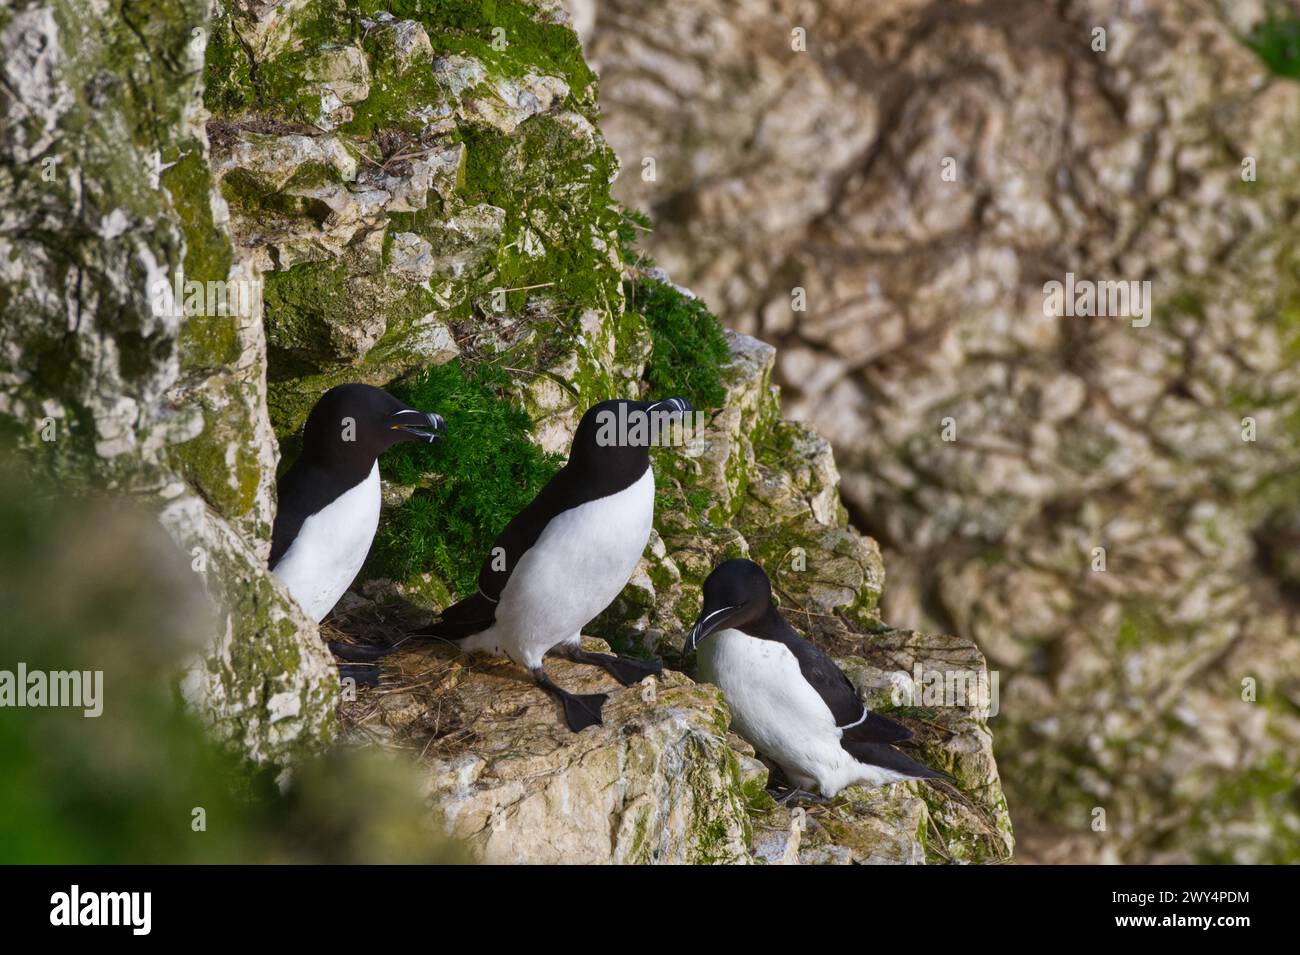 Three razorbill birds having a chat on the edge of a cliff Stock Photo